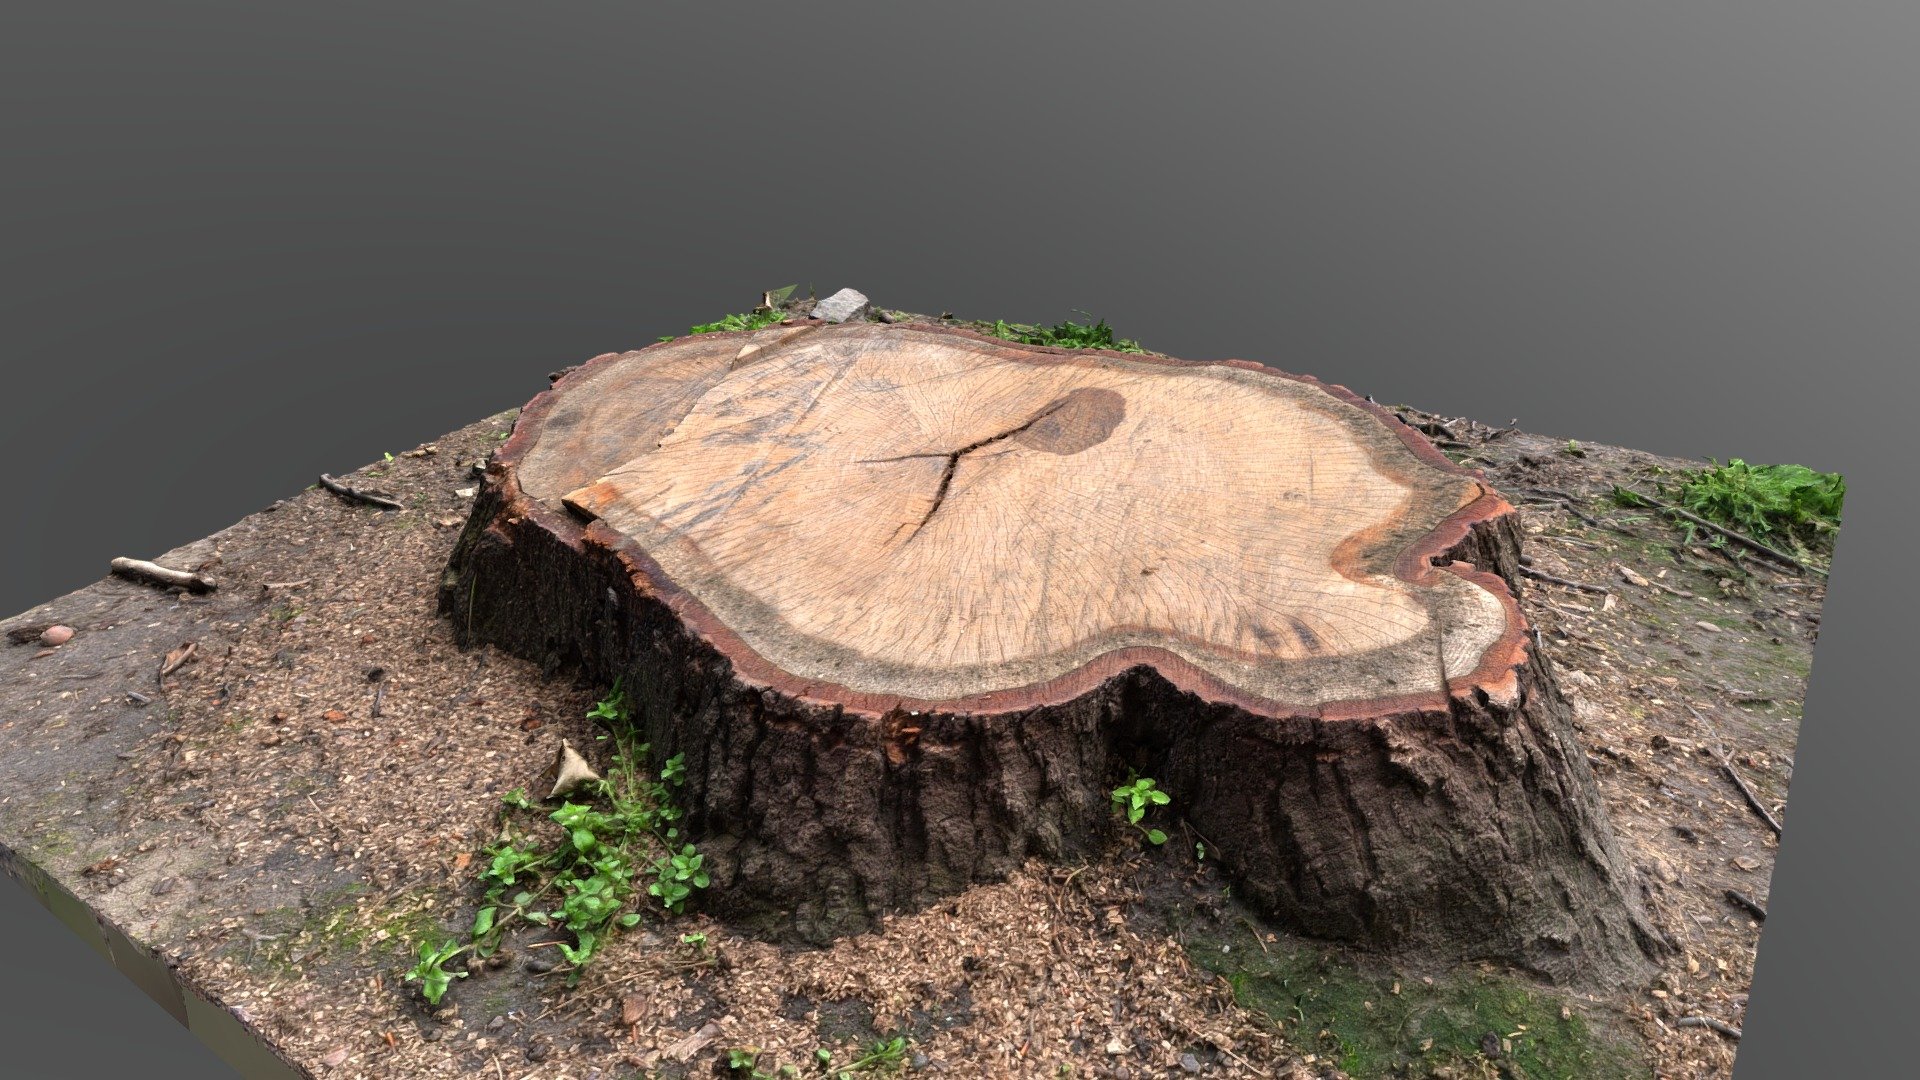 Cut beech tree stump